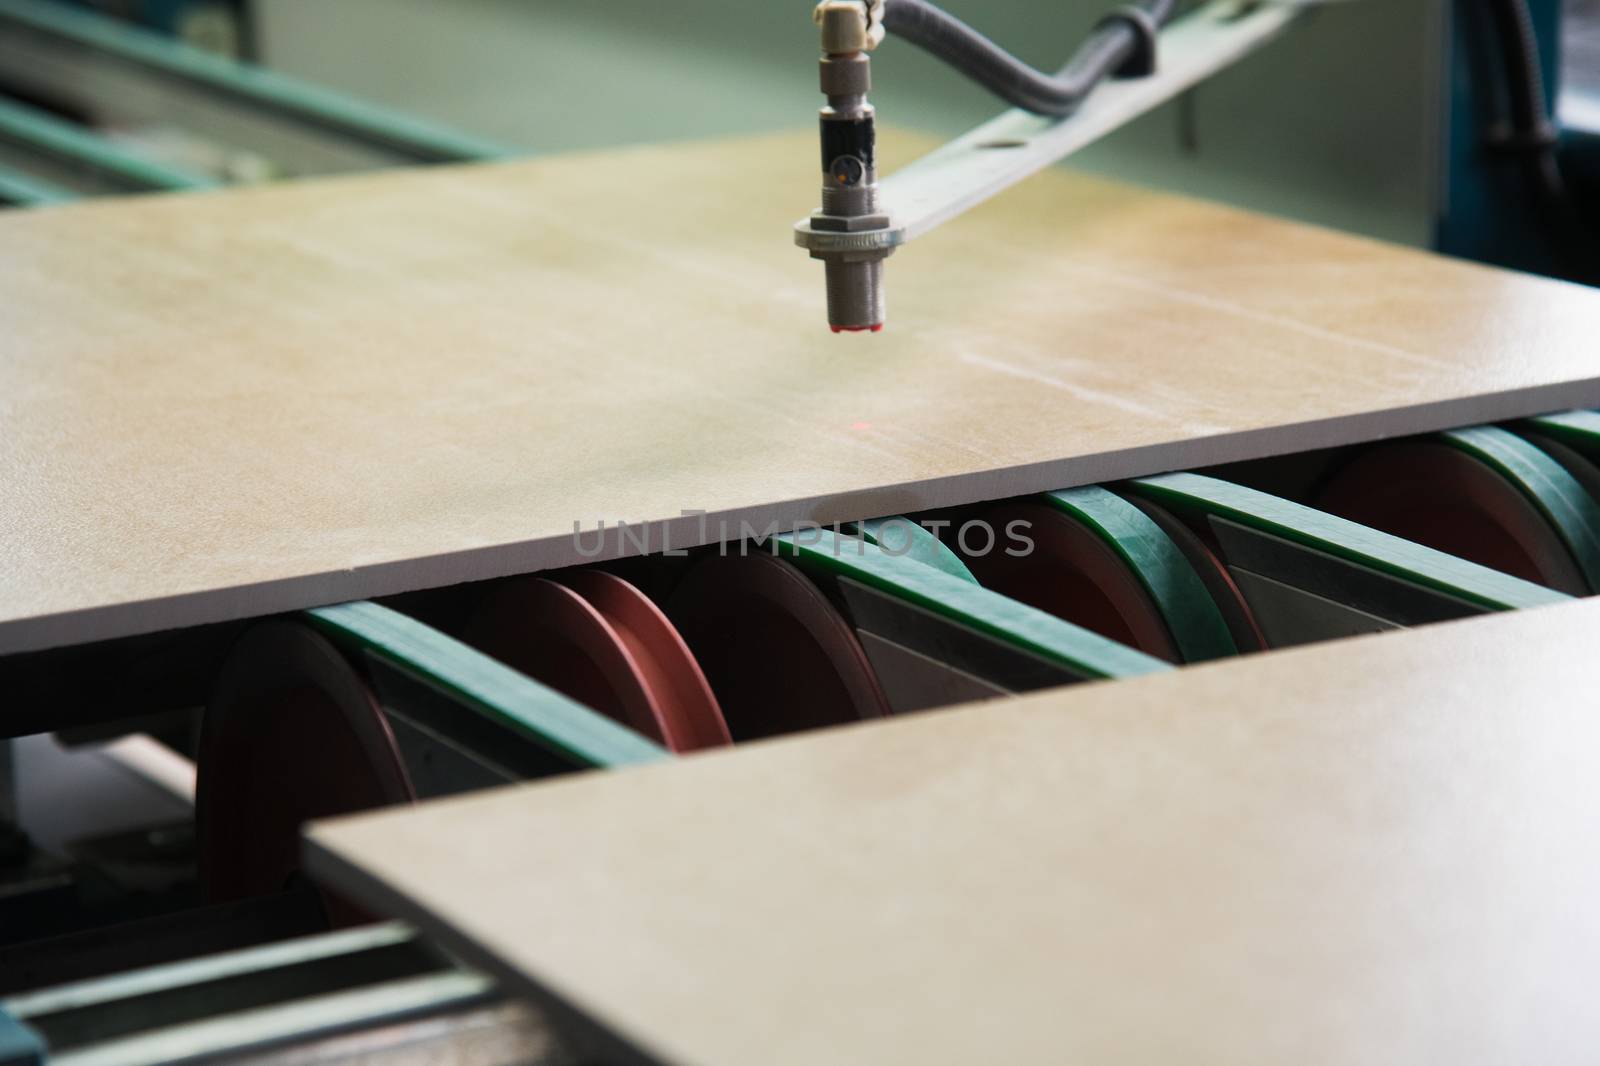 Factory for production of ceramic tiles. Conveyor line for ceram by grigorenko